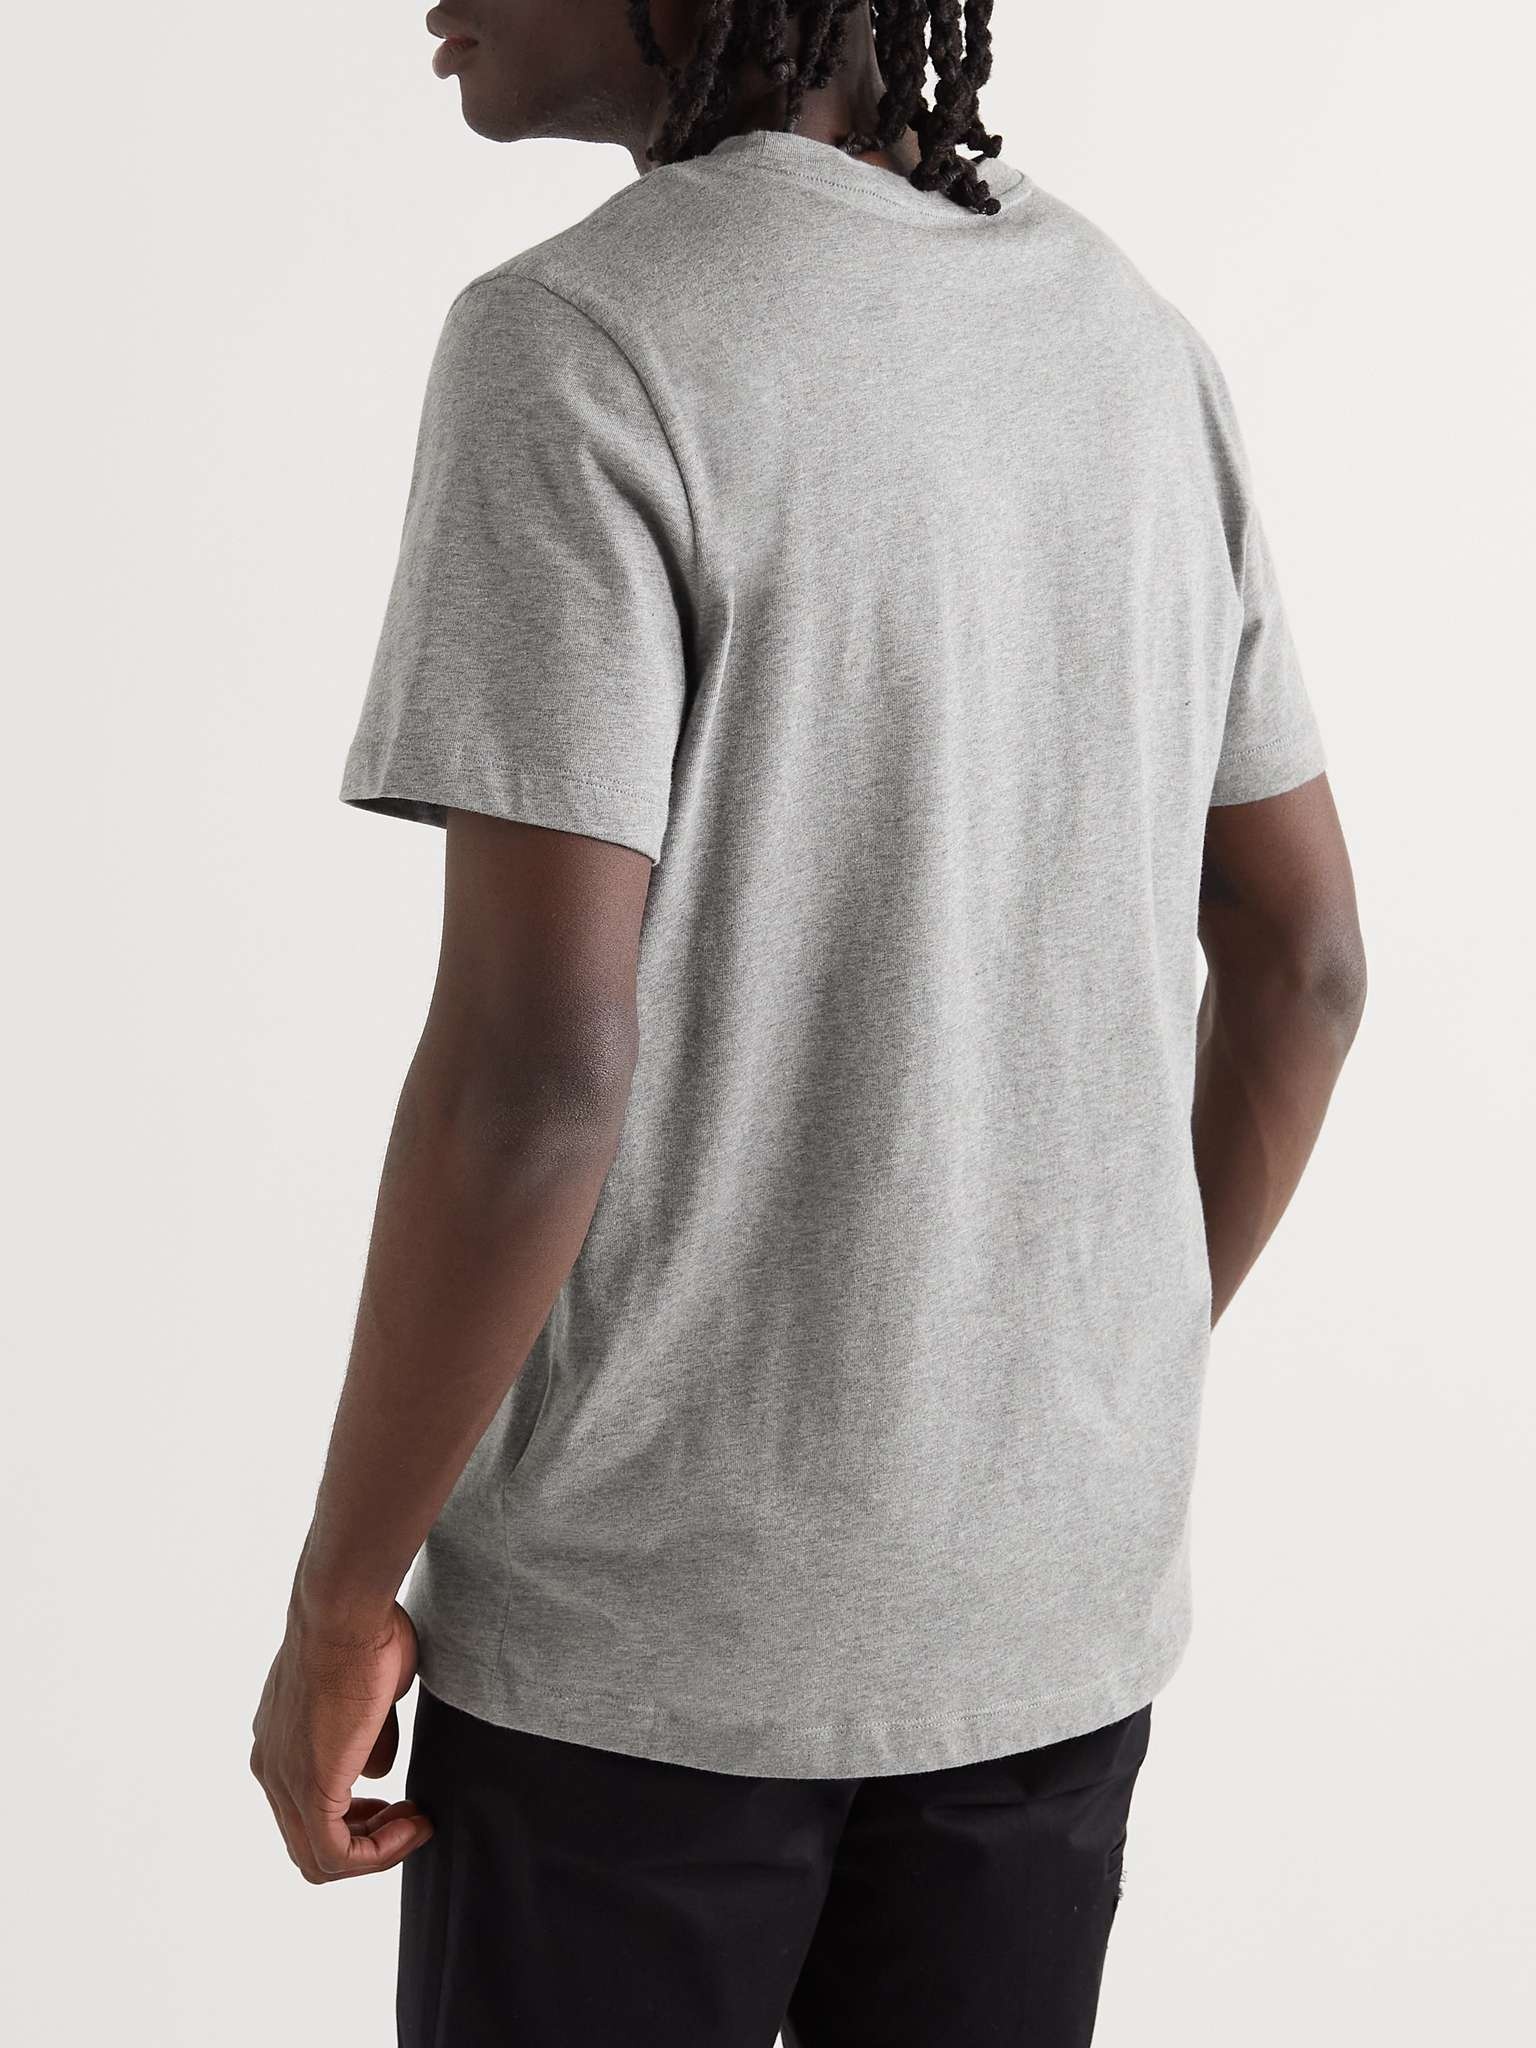 Moncler Logo-Print Short-Sleeve T-Shirt